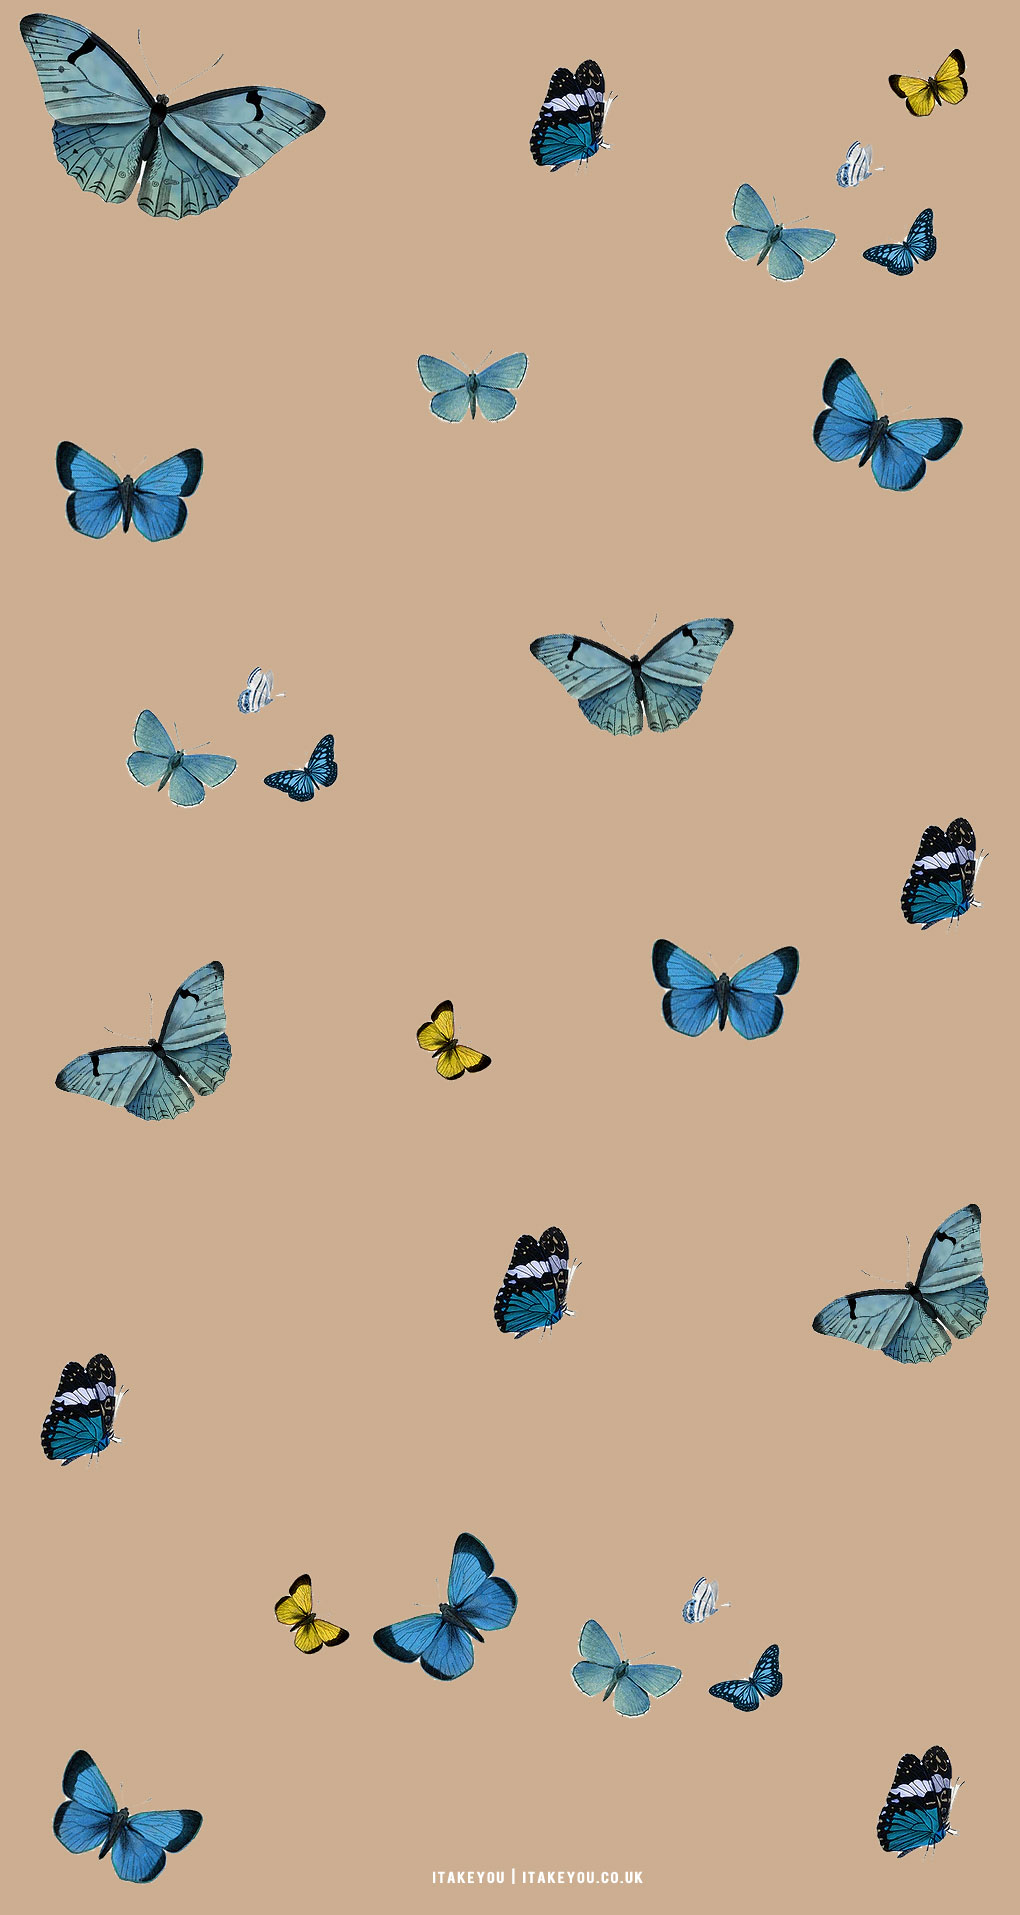 Aesthetic Butterfly Wallpaper  JPG  Templatenet